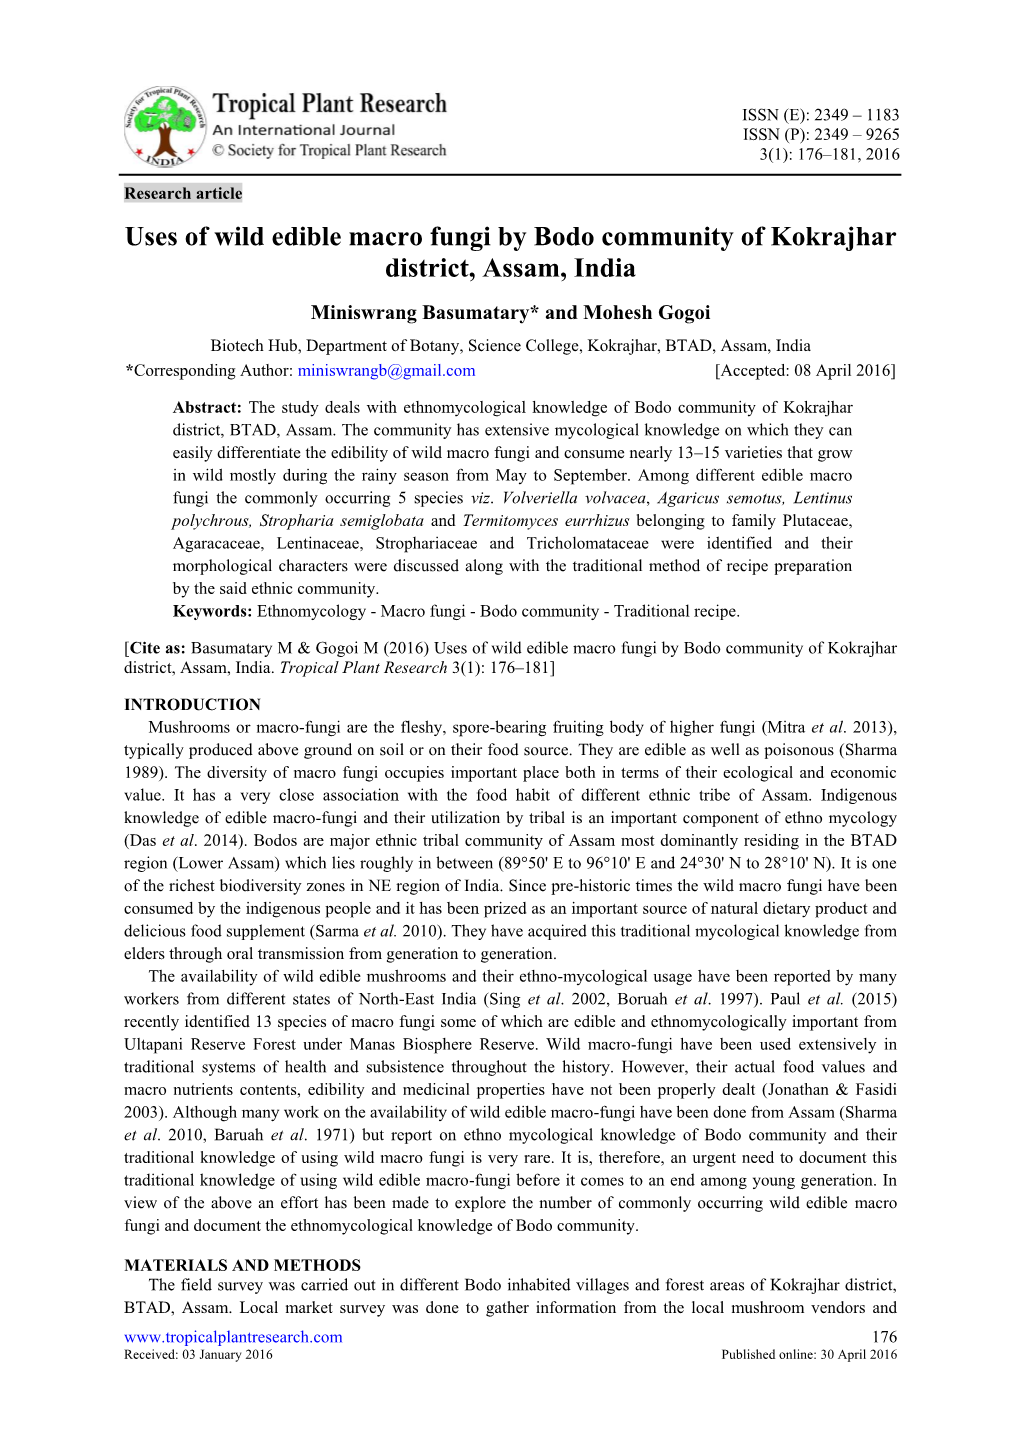 Uses of Wild Edible Macro Fungi by Bodo Community of Kokrajhar